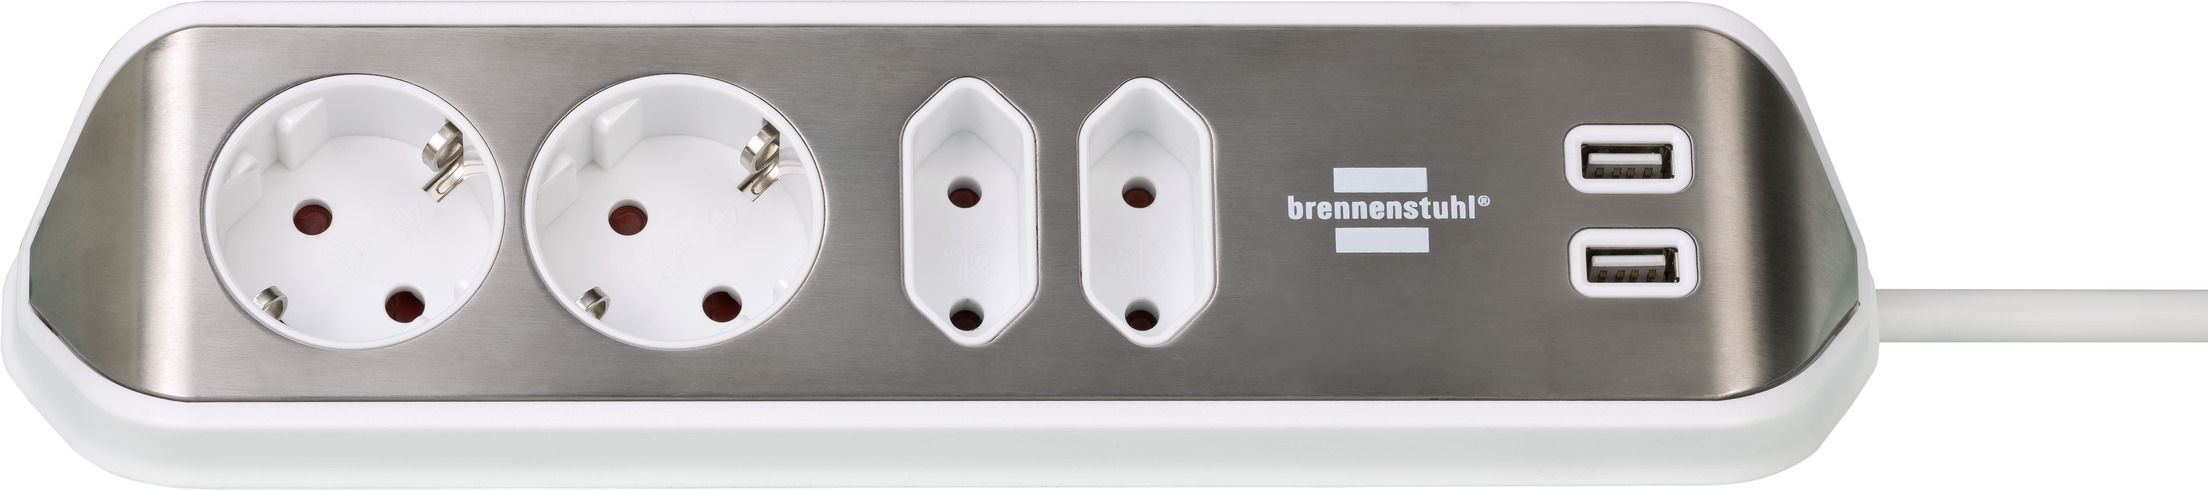 brennenstuhl®estilo USB multicargador con cable textil de 1,5 m 4x USB + 1x  USB C